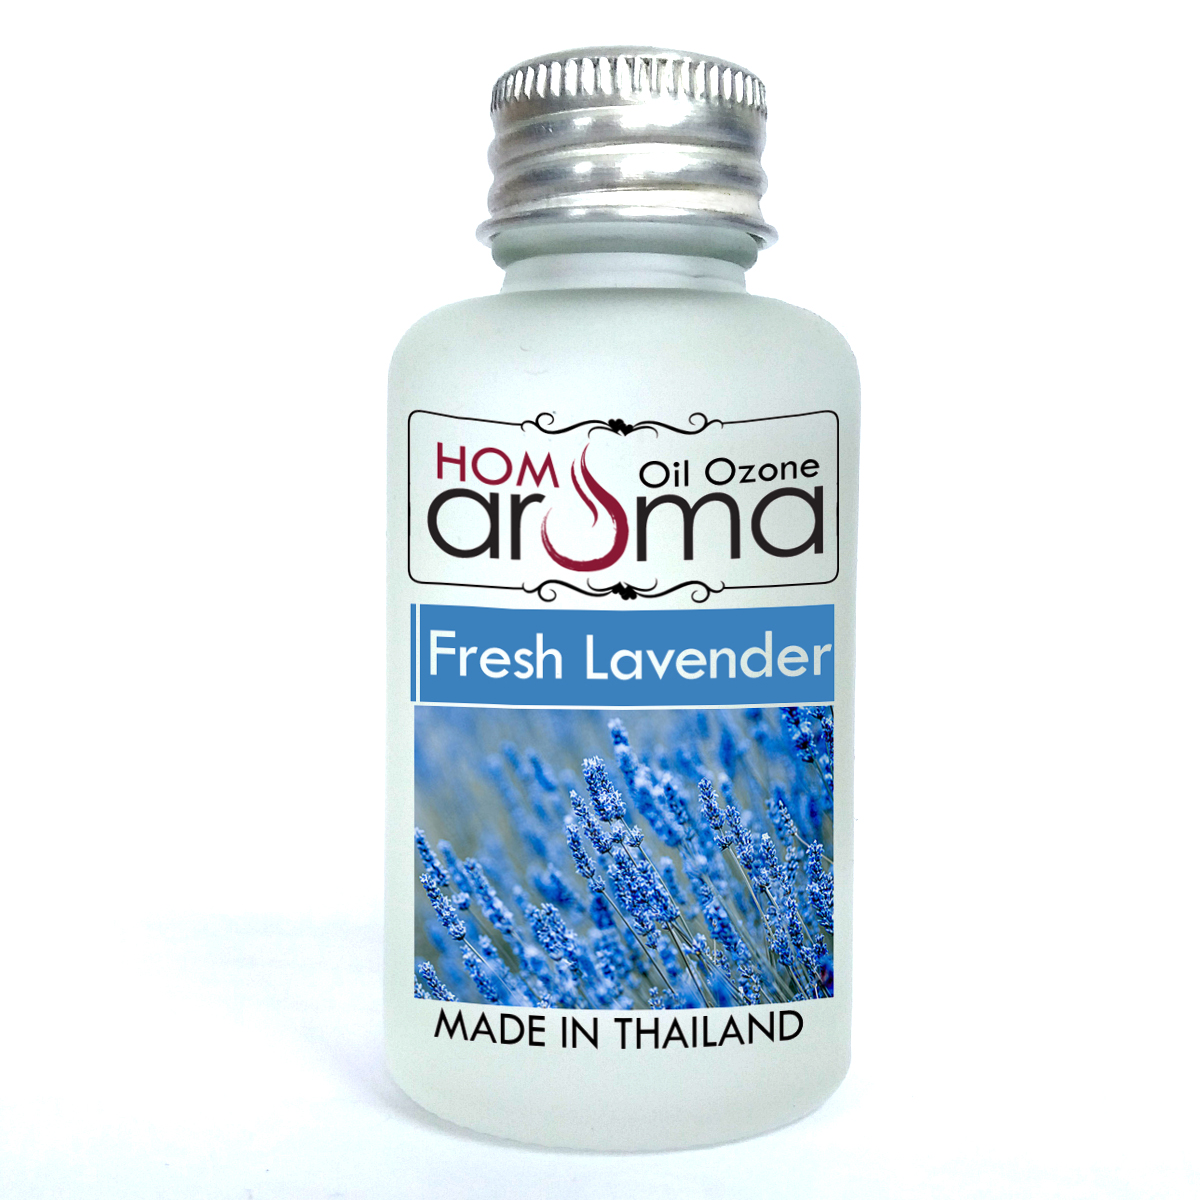 Hom Aroma ออย โอโซน น้ำมันหอม น้ำมันหอมระเหย อโรม่า ออย กลิ่น เฟรชลาเวนเดอร์​ Fresh Lavender สำหรับ เครื่องพ่นไอน้ำ Oil Ozone